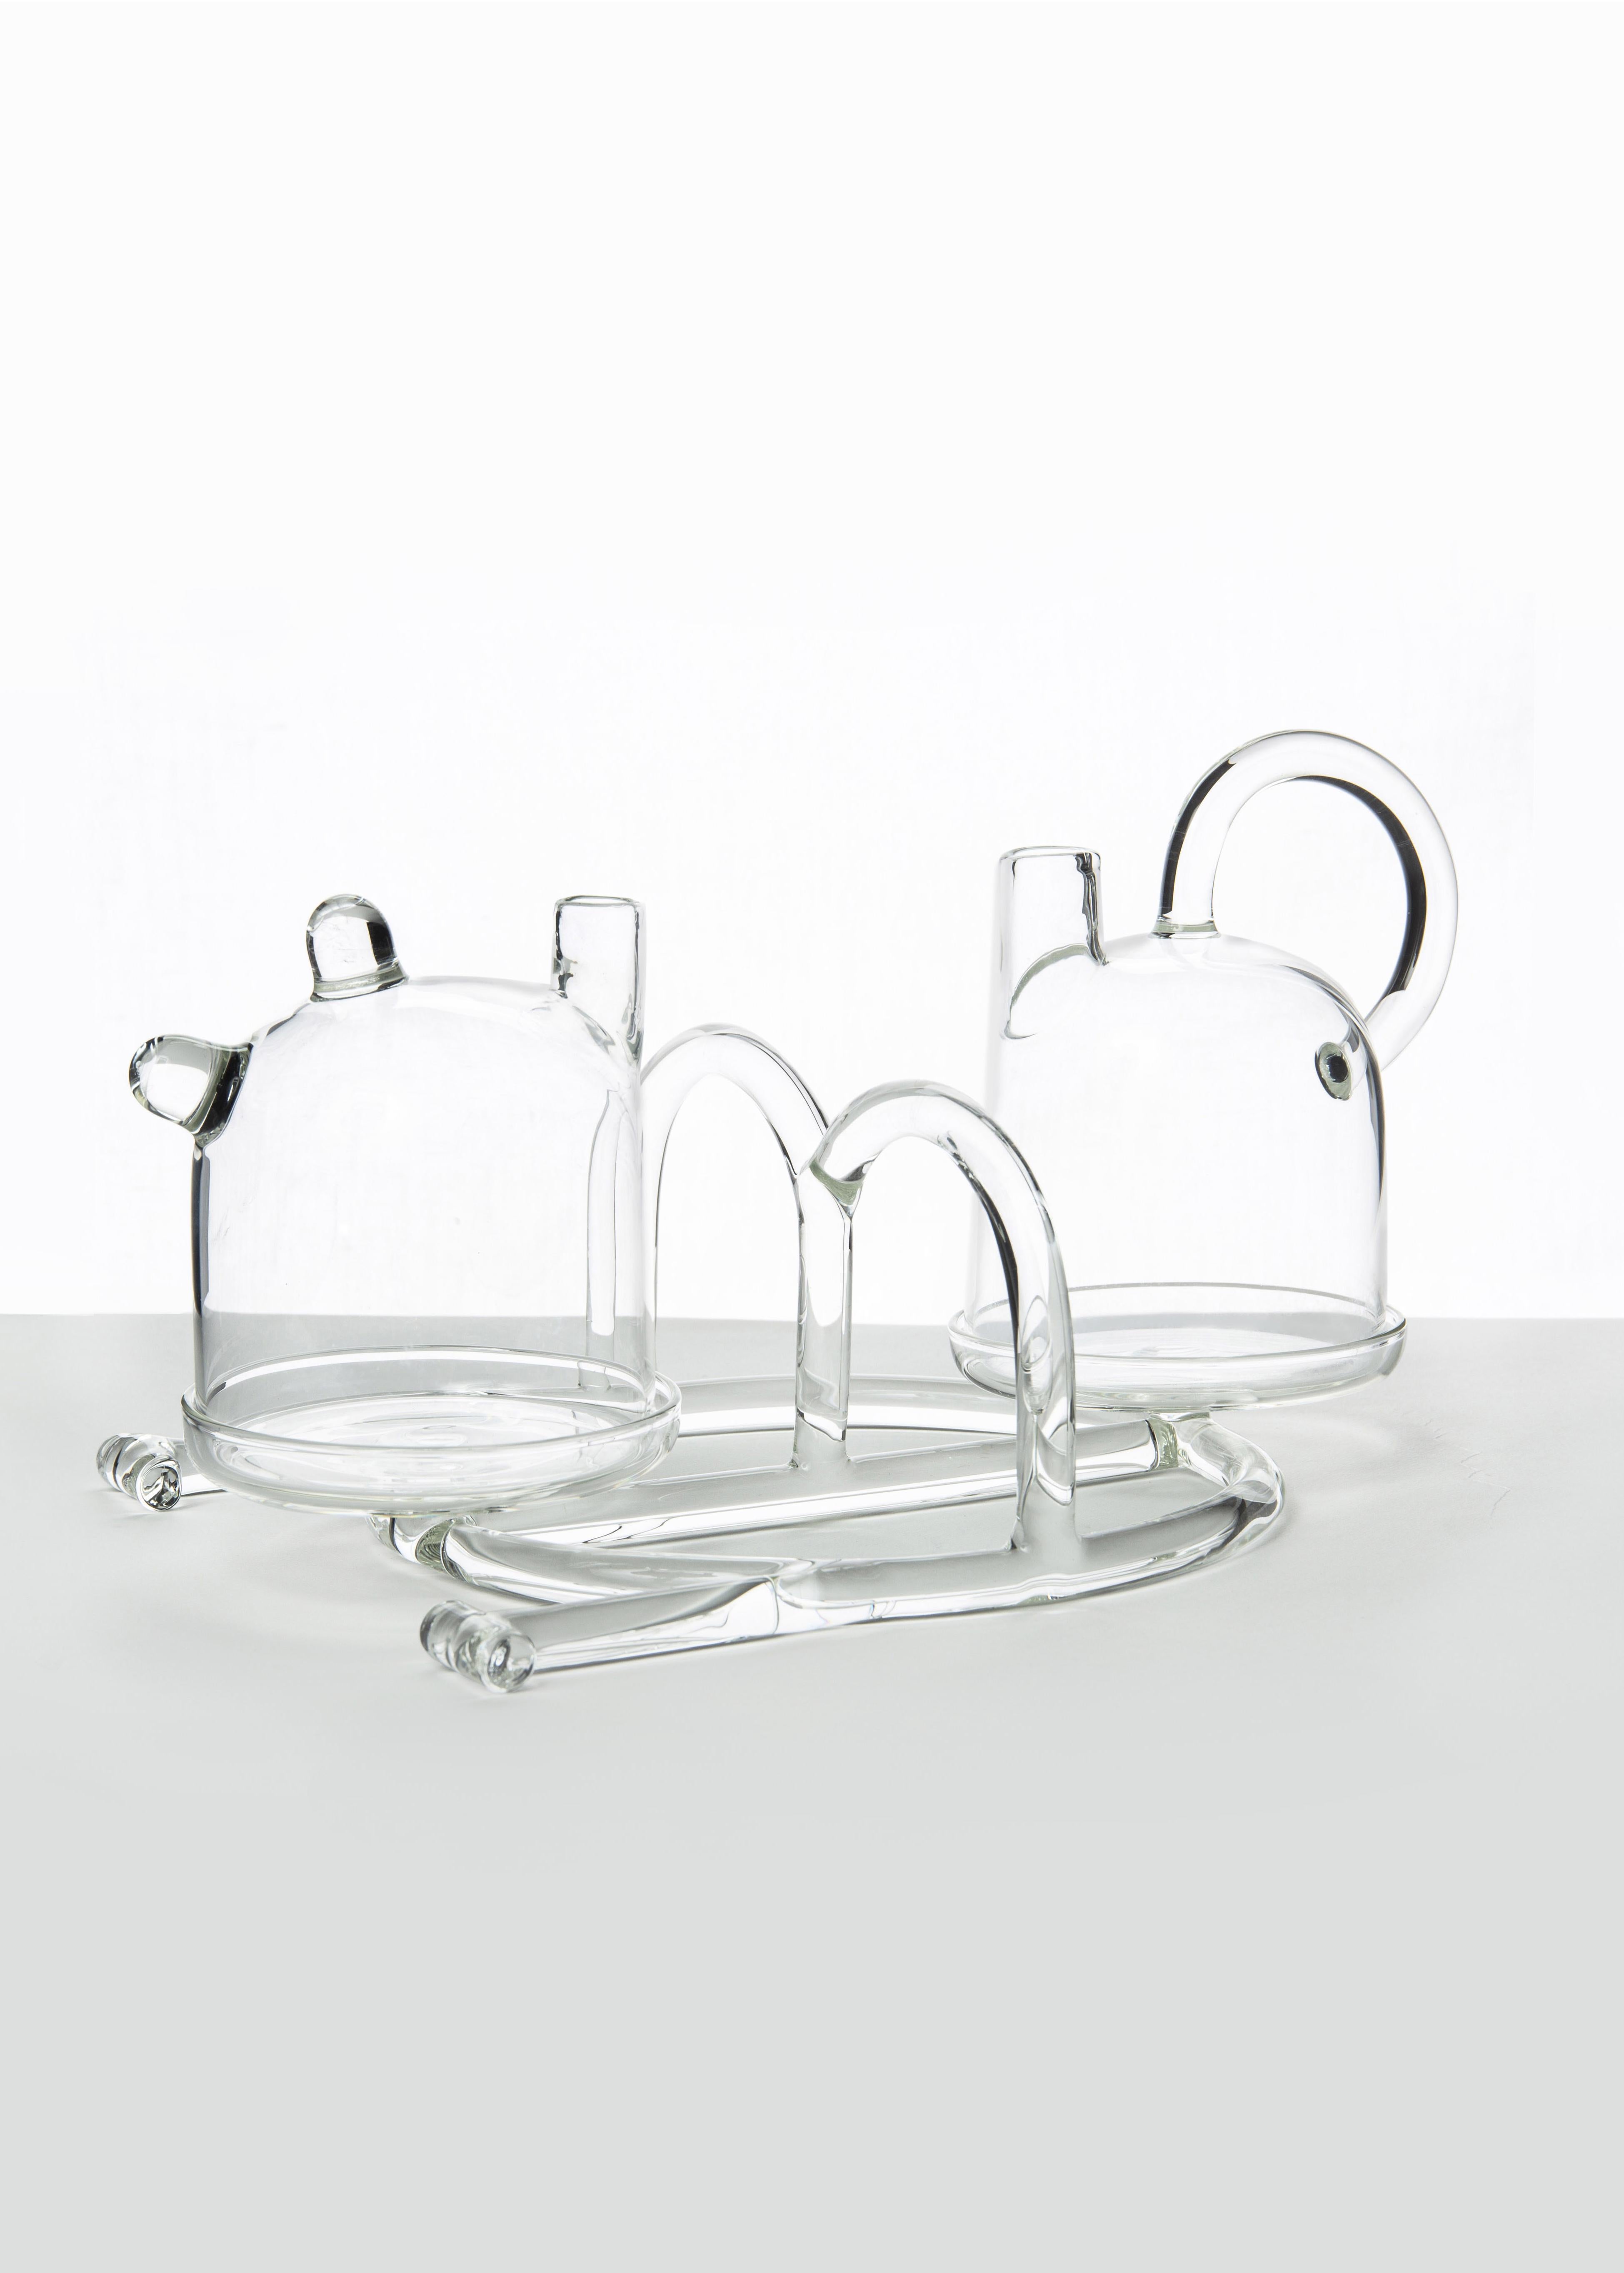 Contemporary Oil and Vinegar Cruet Tableware Kitchen Set Glass Handmade In New Condition For Sale In Milano, IT